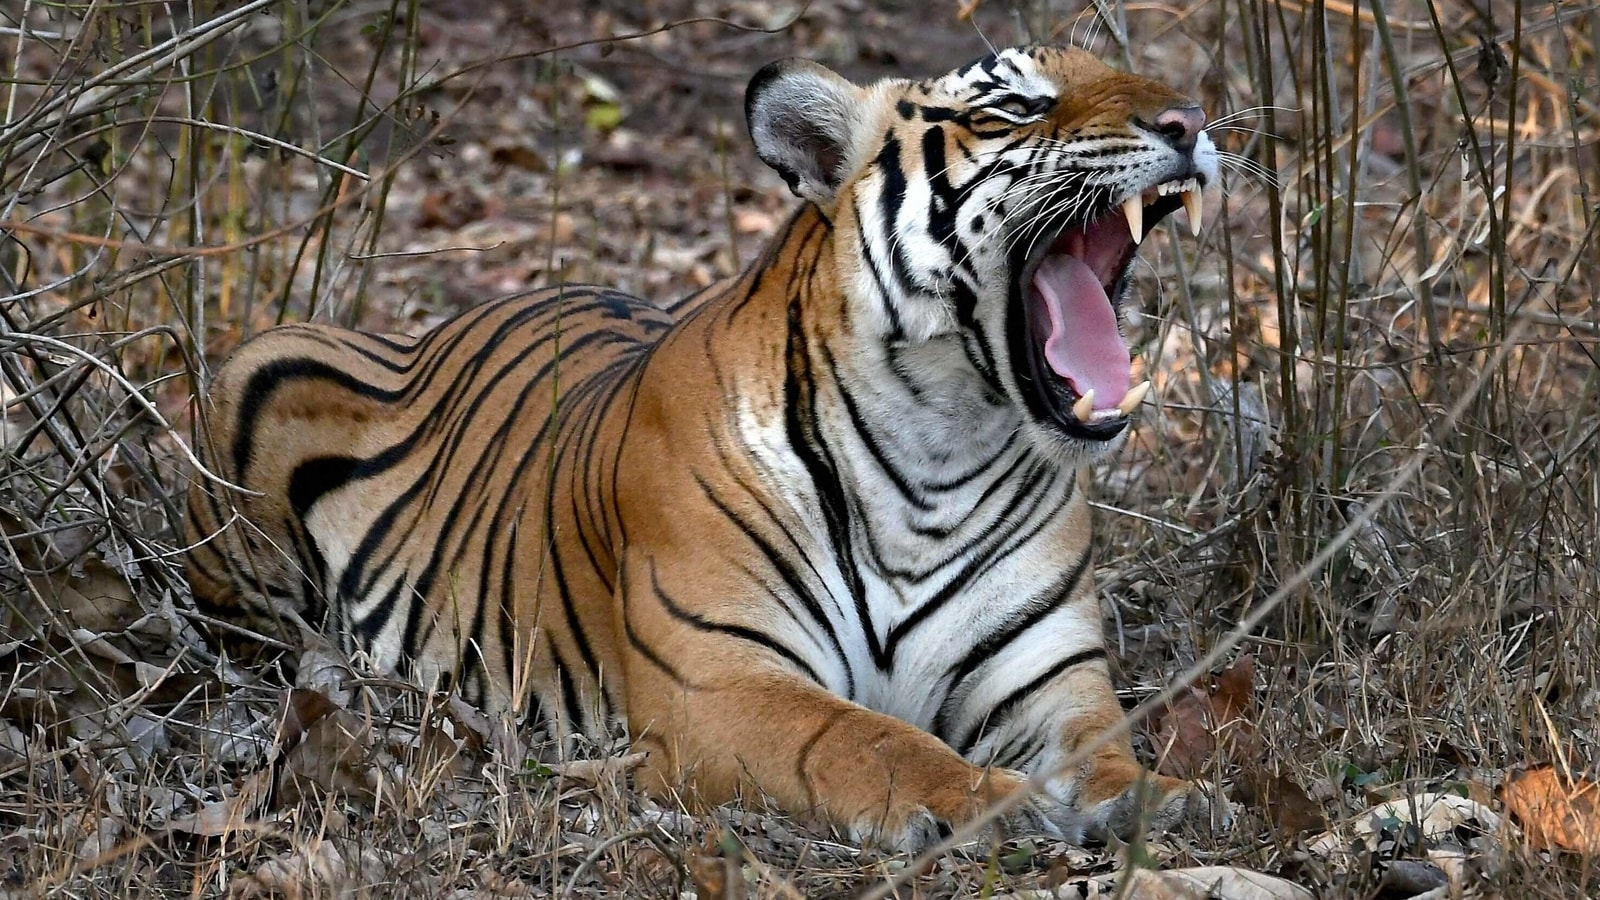 Karnataka registers 37% jump in tiger attacks in 2020-21 from last year |  Latest News India - Hindustan Times